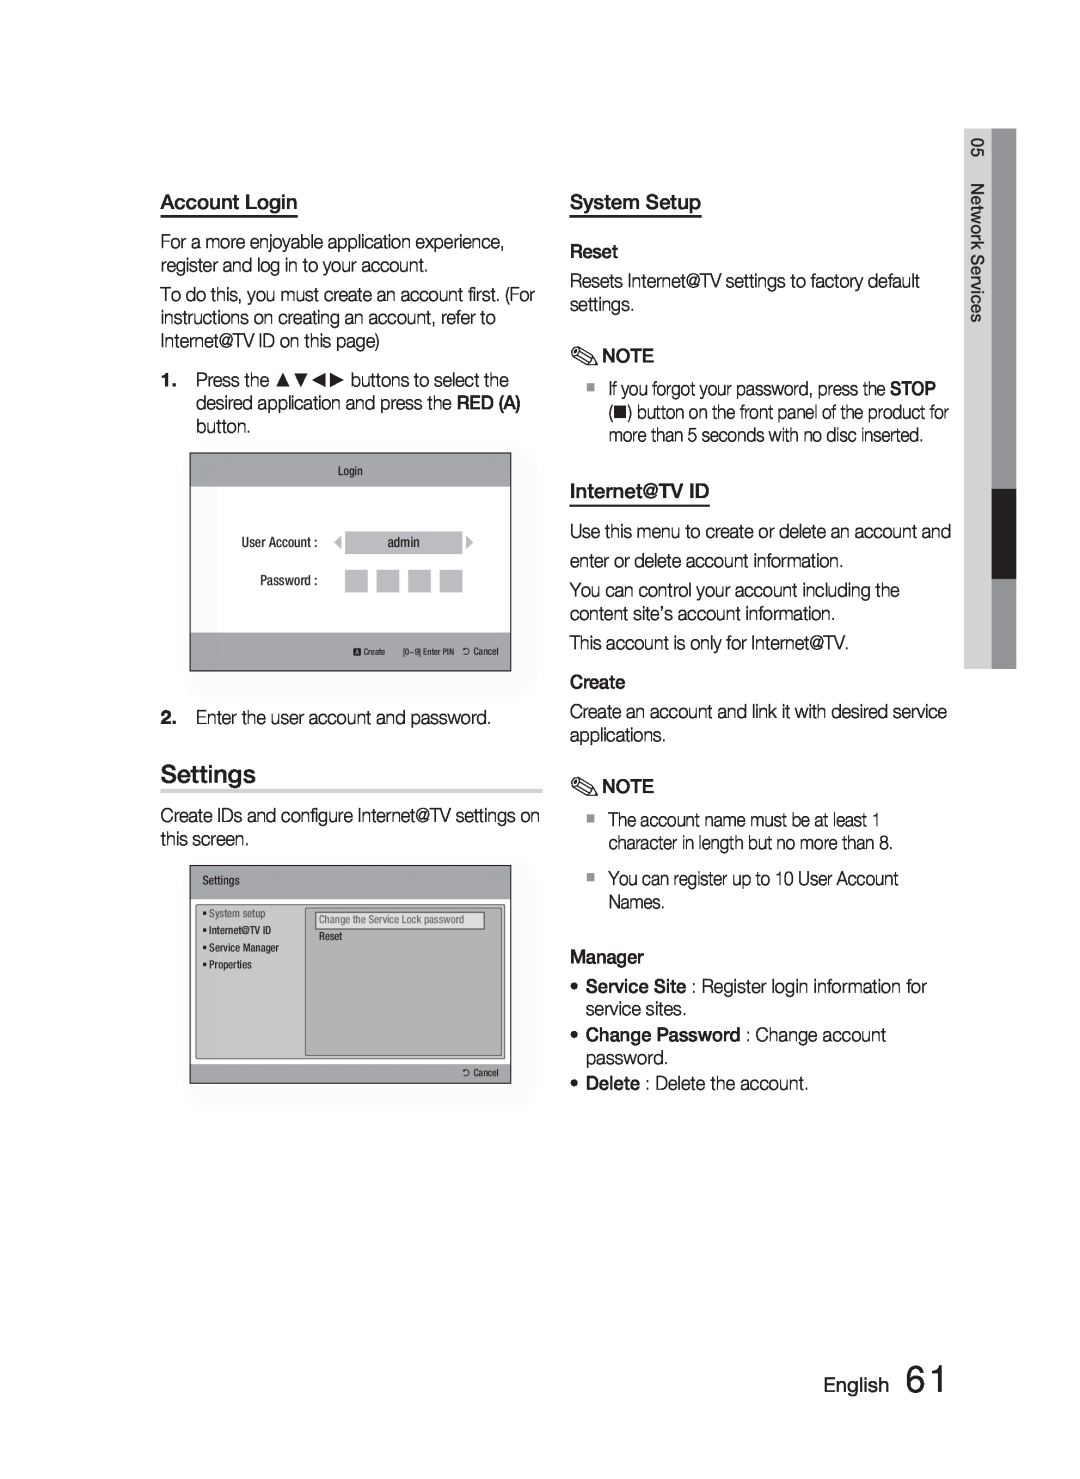 Samsung HT-C6900W user manual Settings, Account Login, System Setup, Internet@TV ID, English 